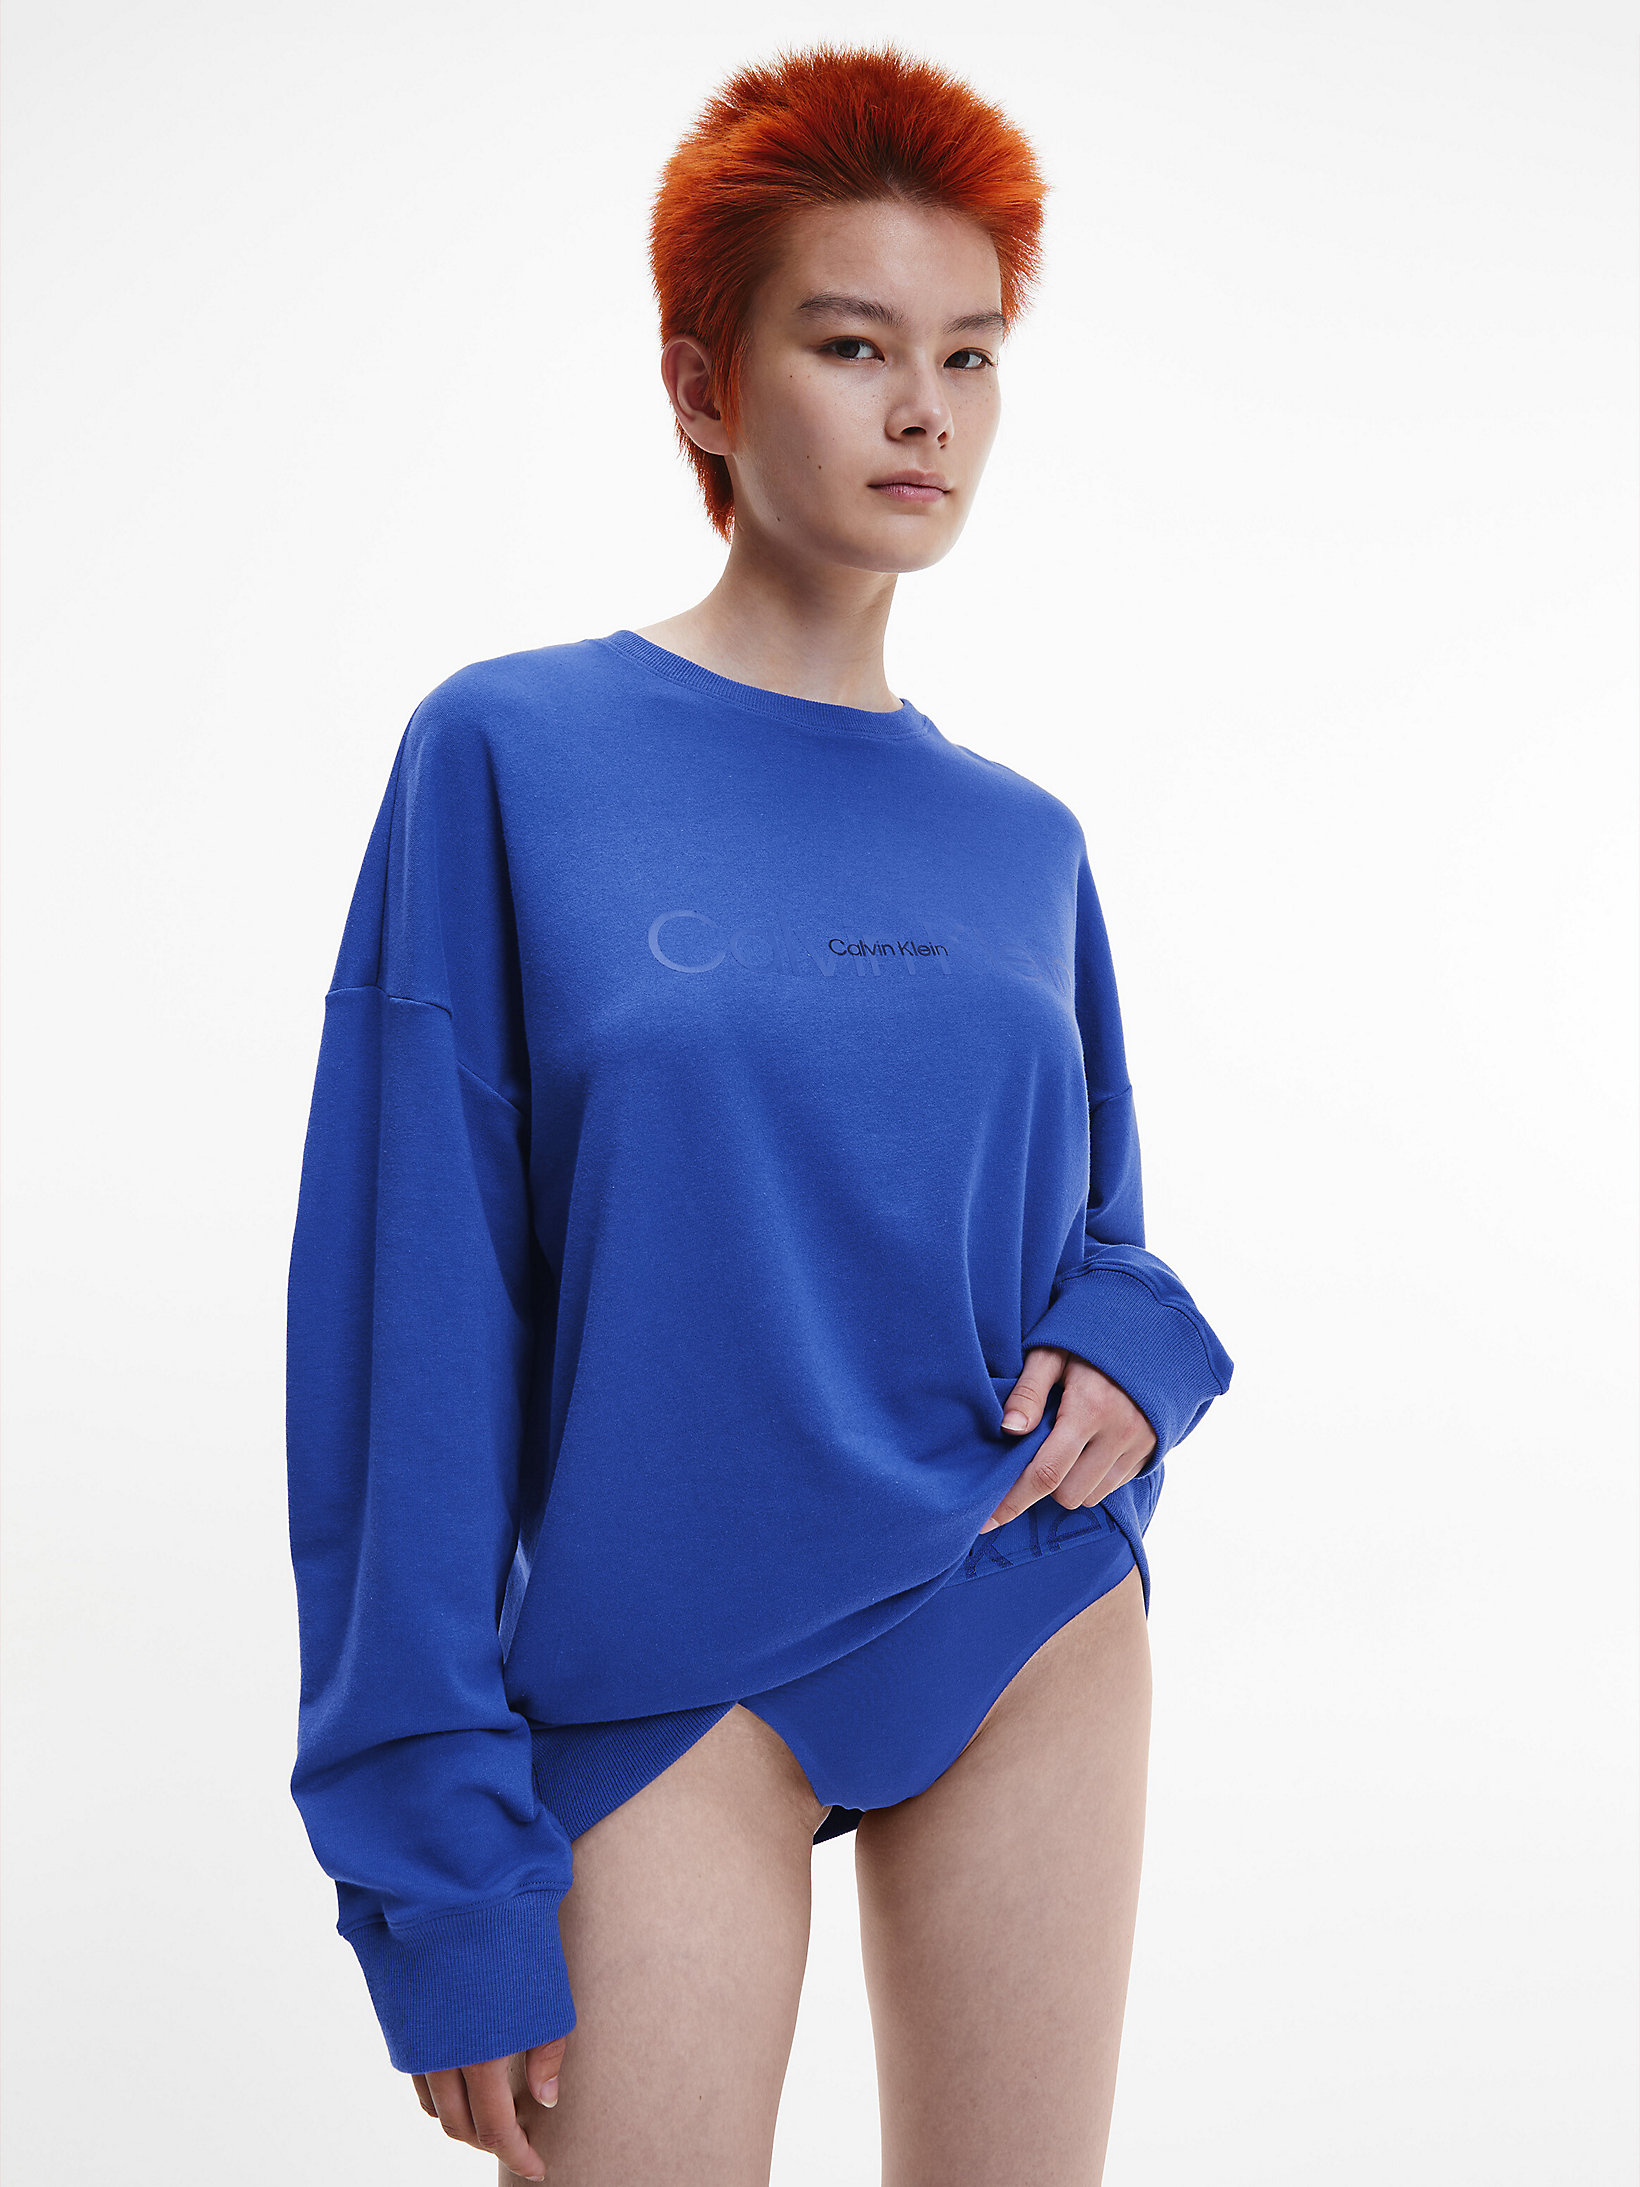 Camiseta De Pijama - Embossed Icon > Clematis > undefined mujer > Calvin Klein